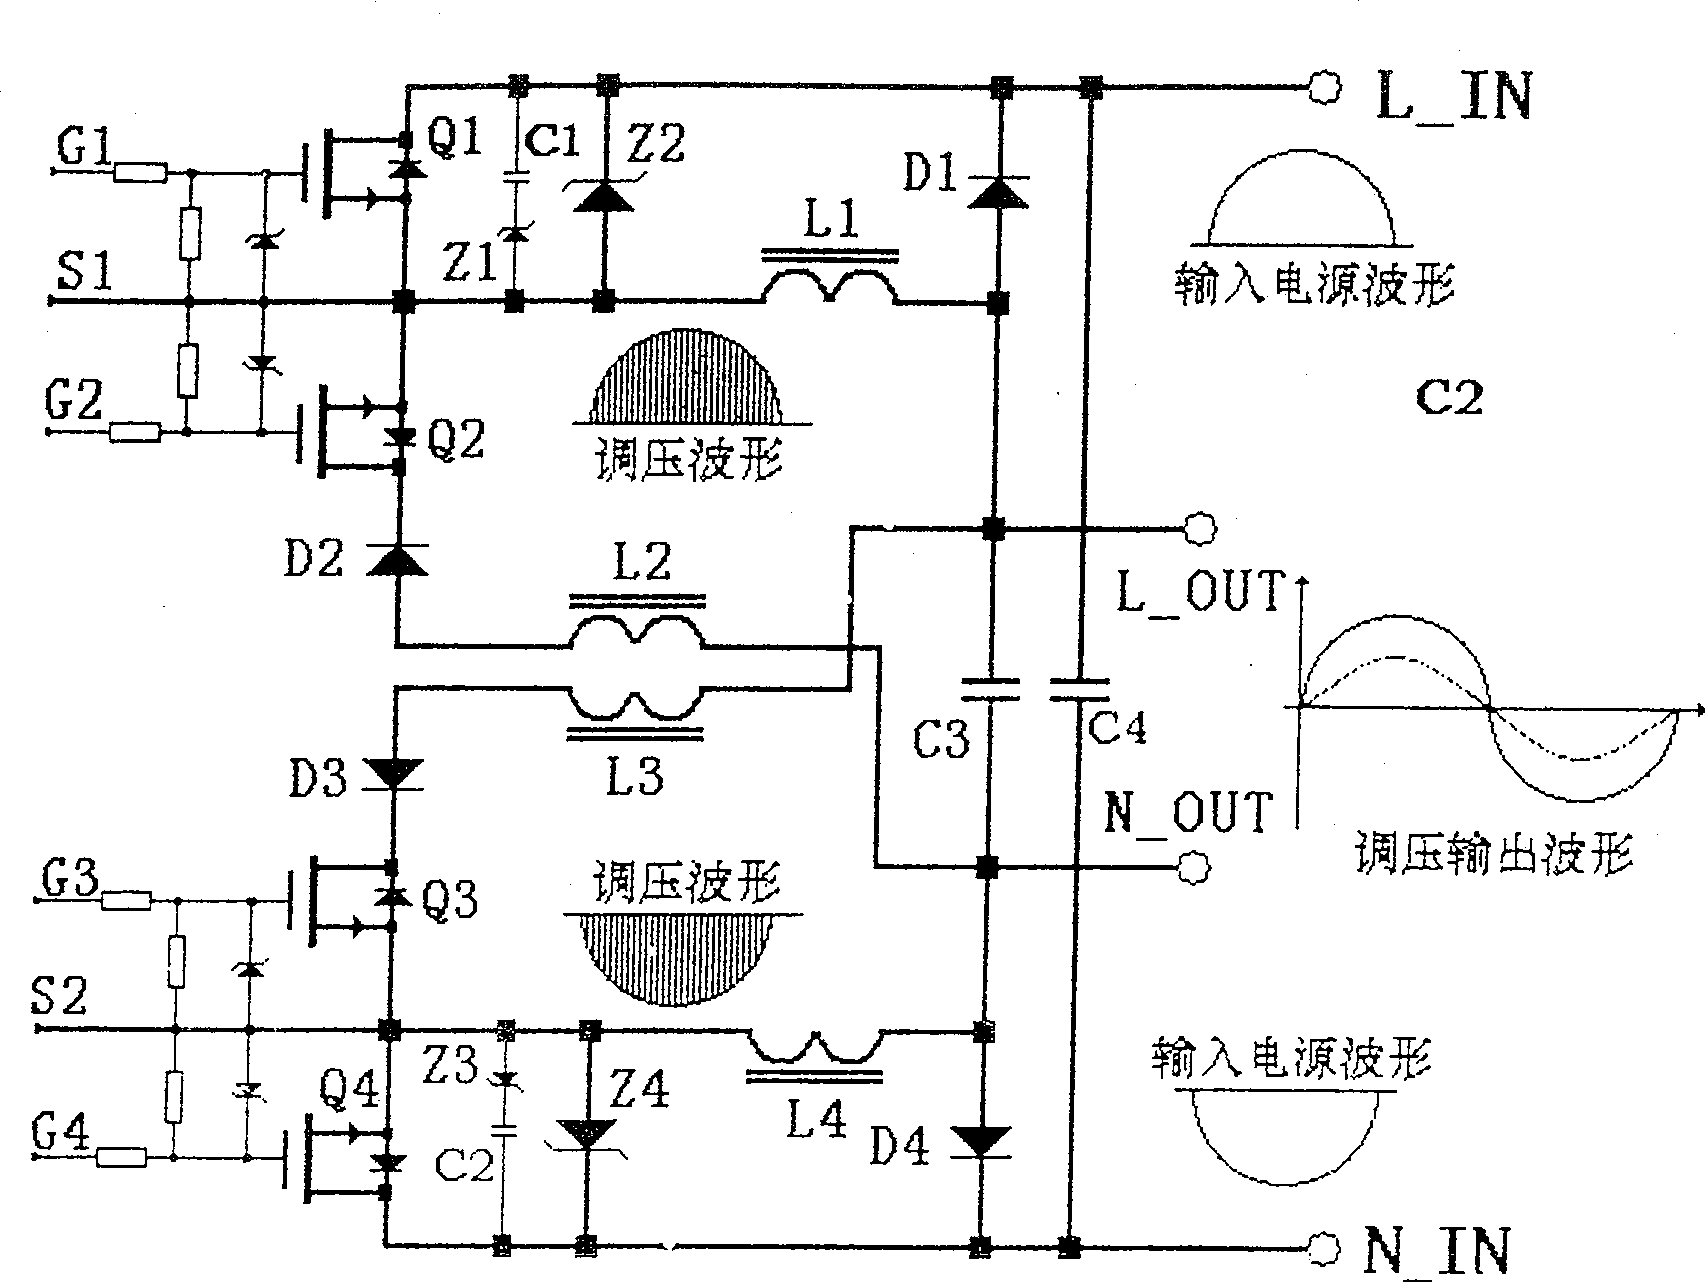 Voltage adjustable drive in AC power source of sine wave